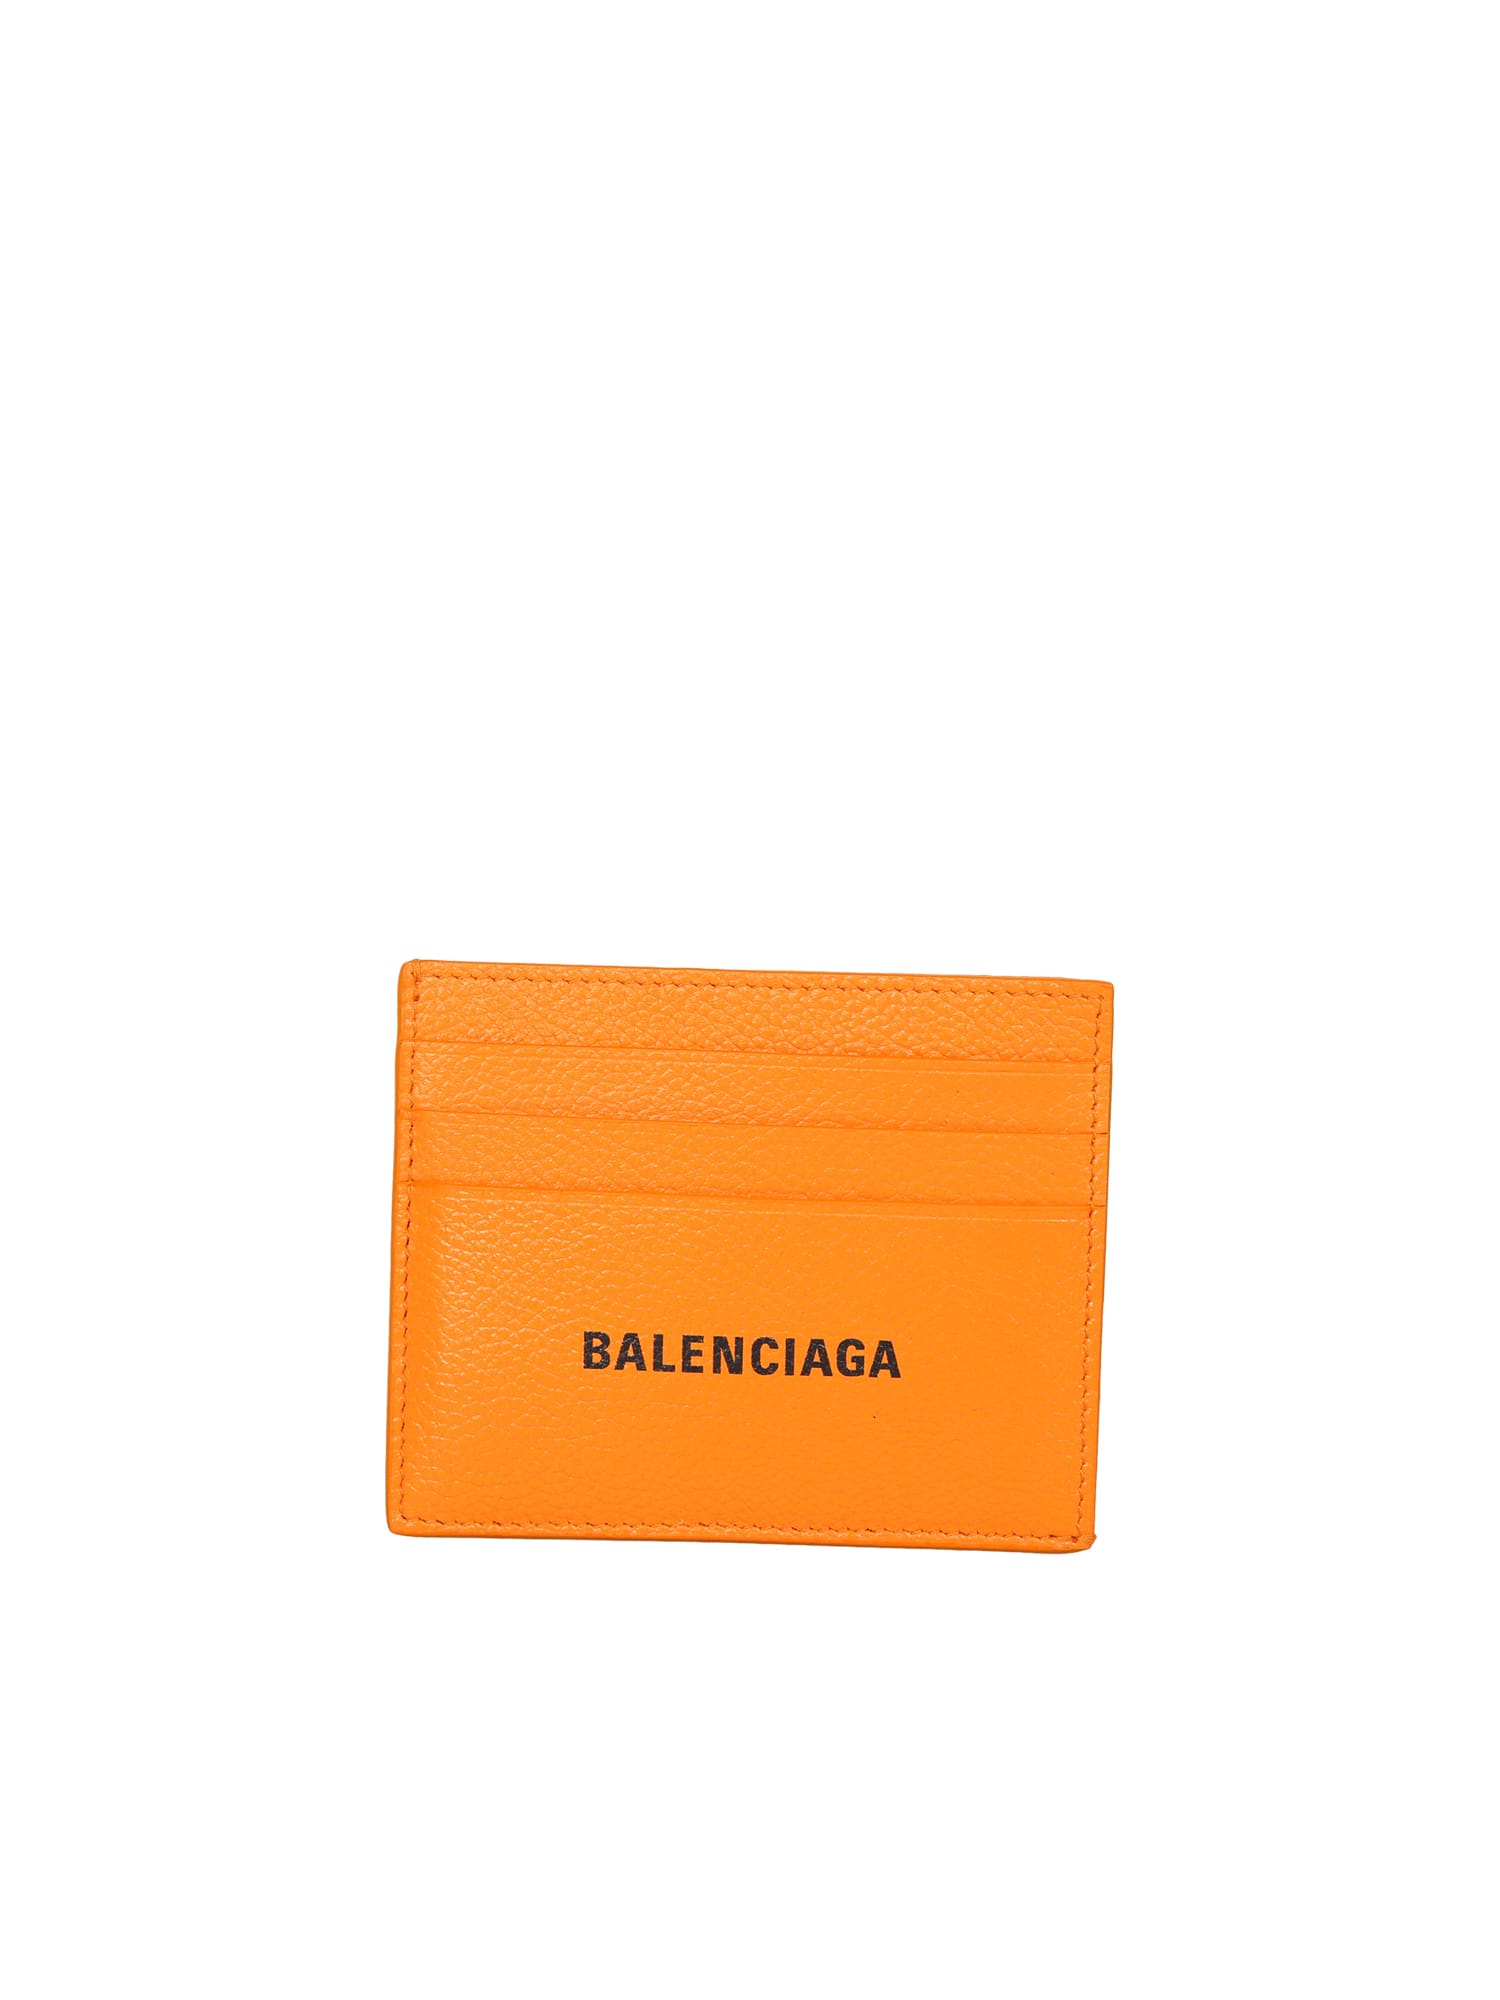 This Card Holder From Balenciaga Has Sleek And Pratical Design